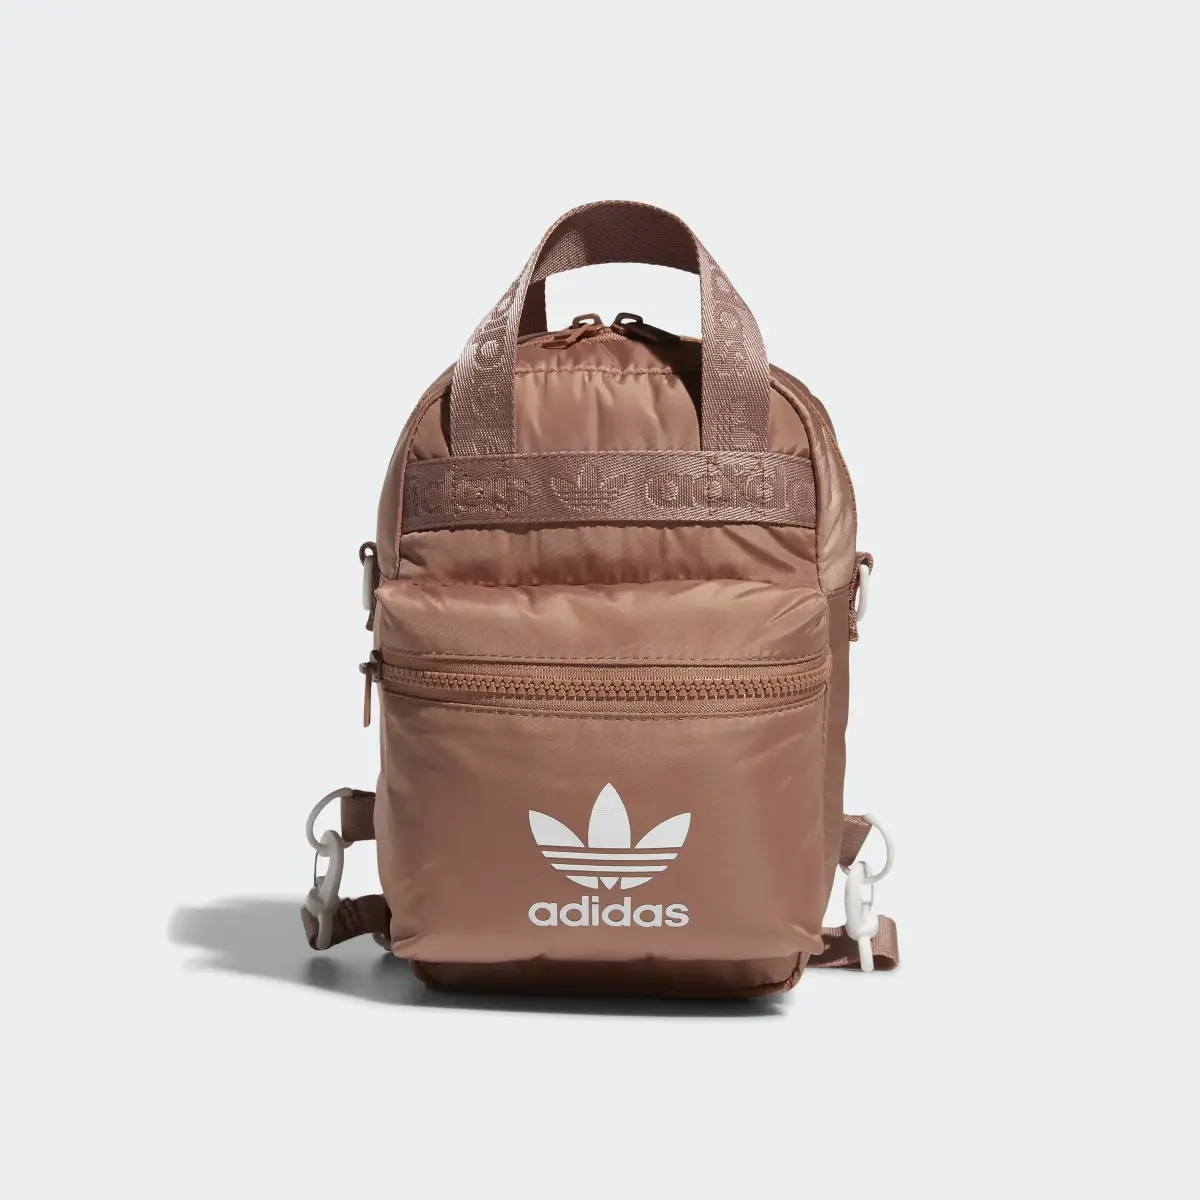 Adidas Micro Backpack. 2